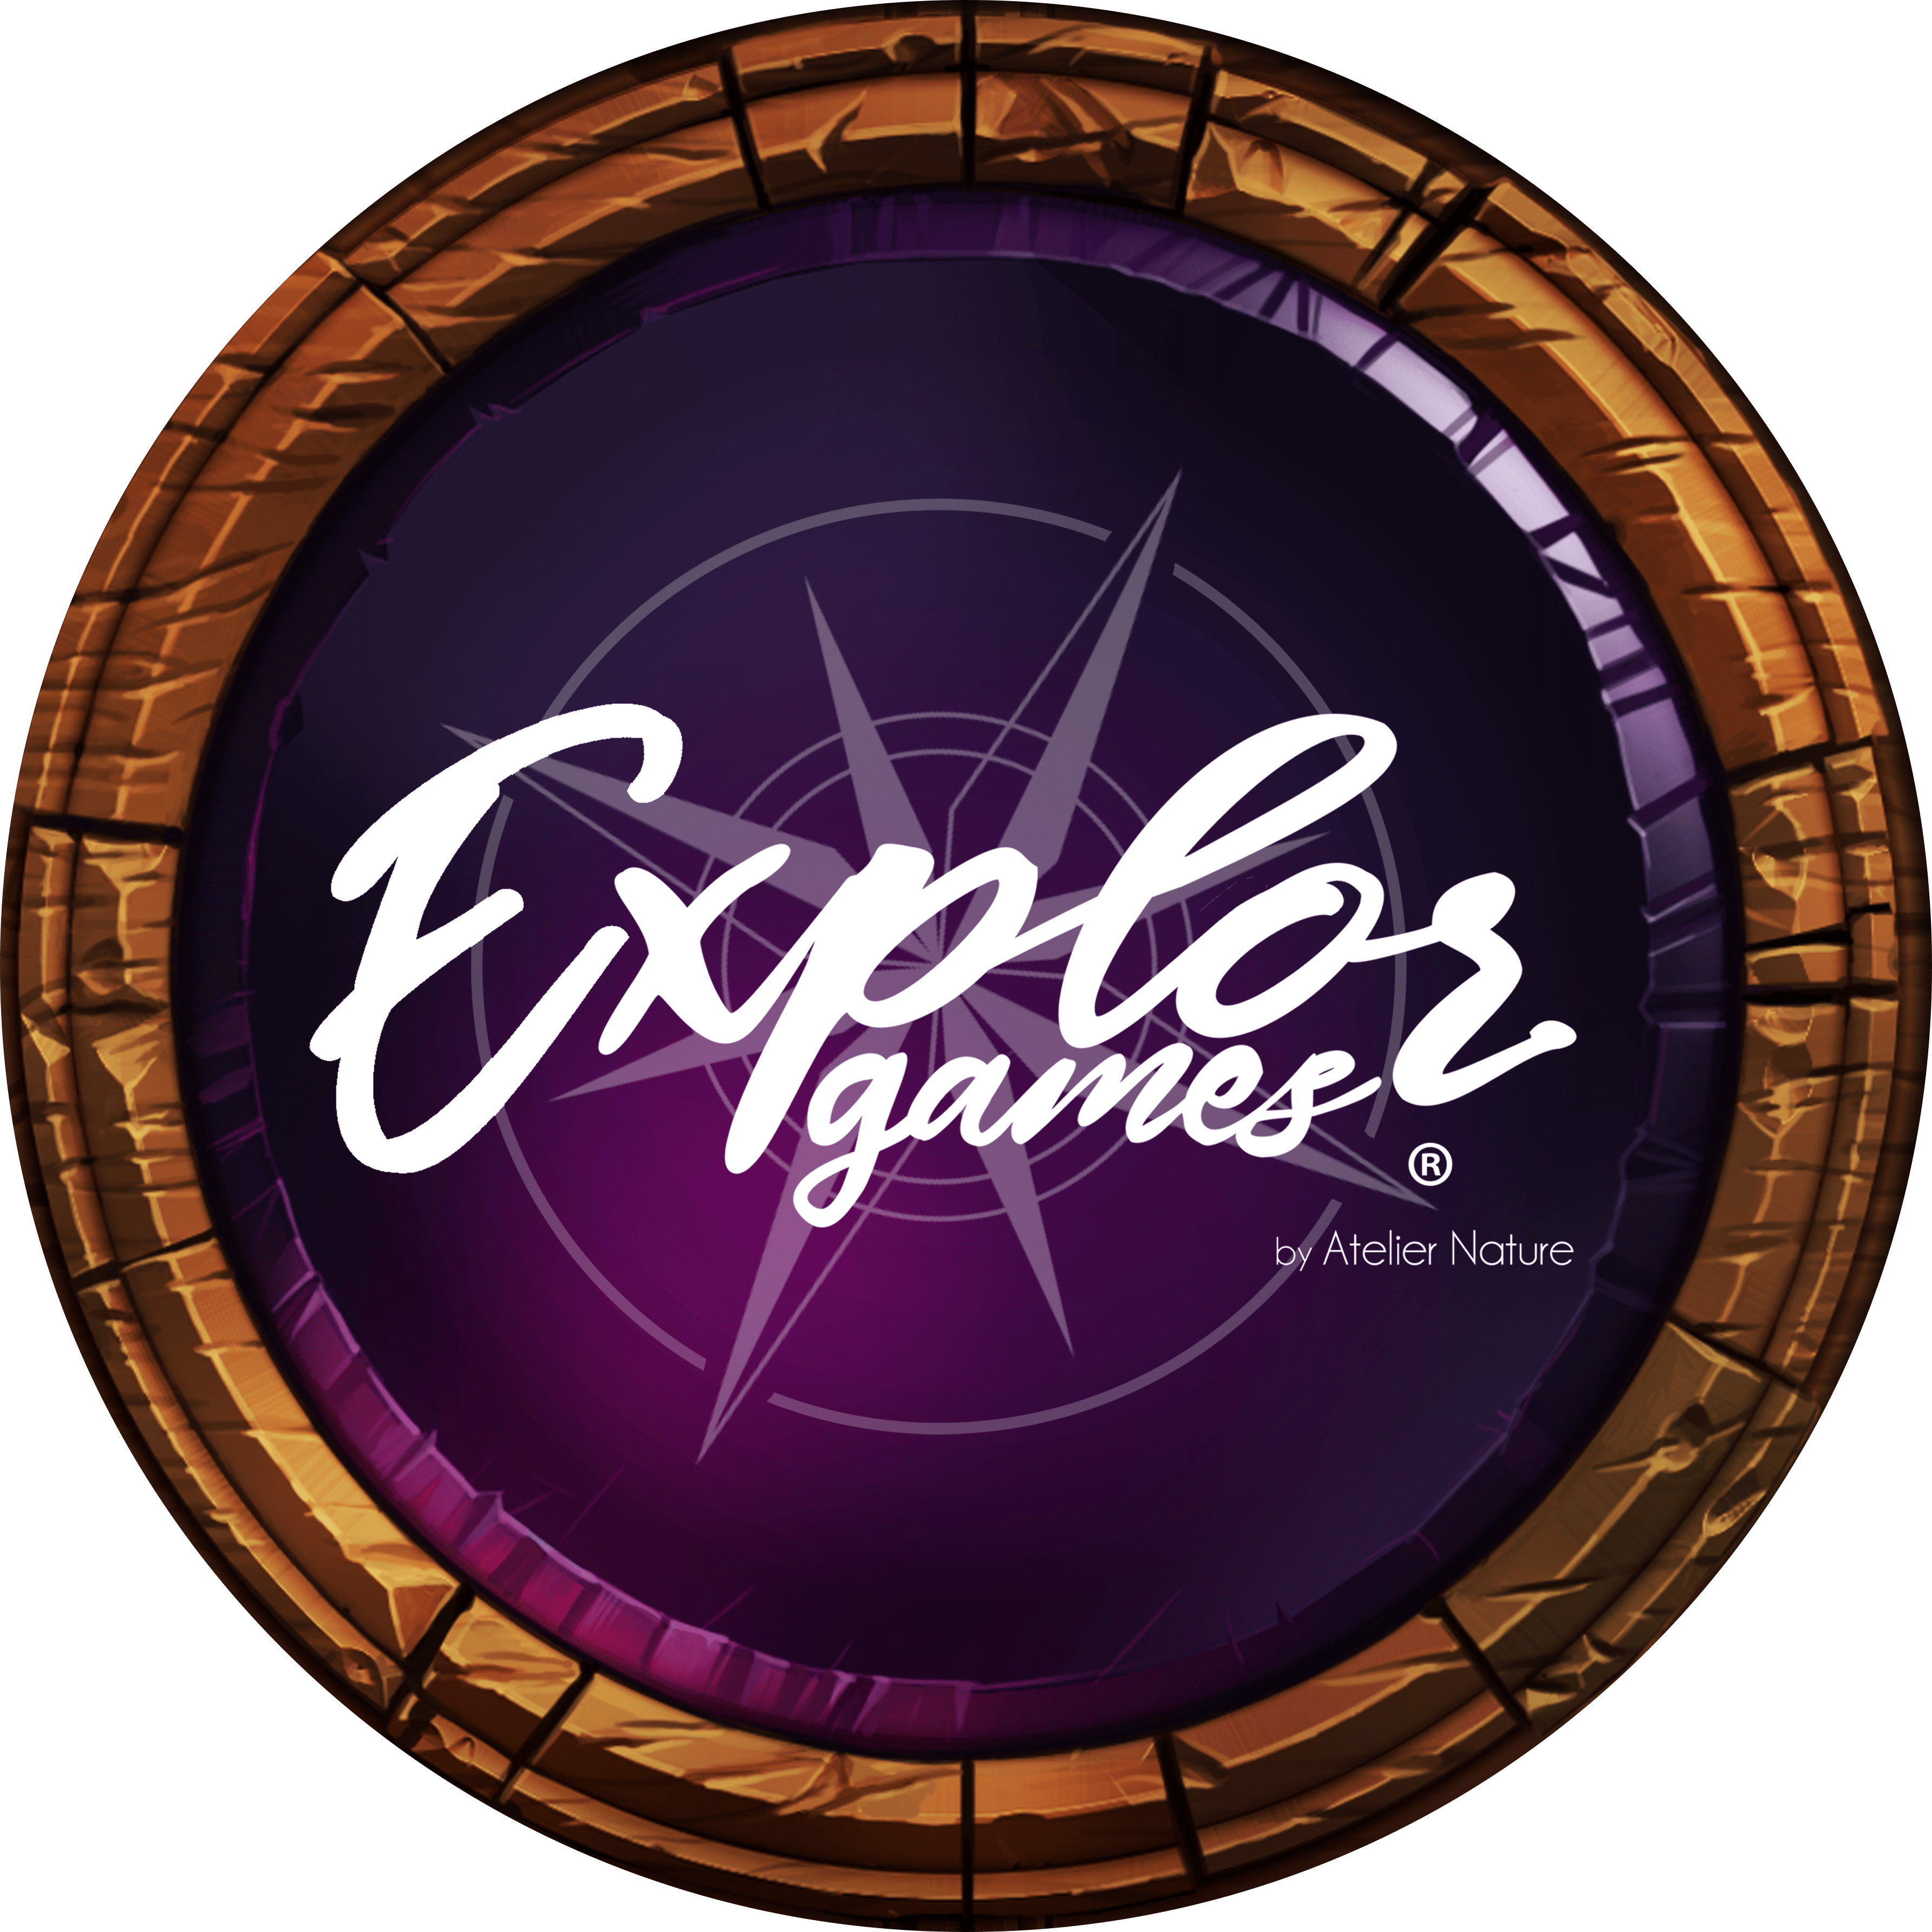 Berry Explor Games